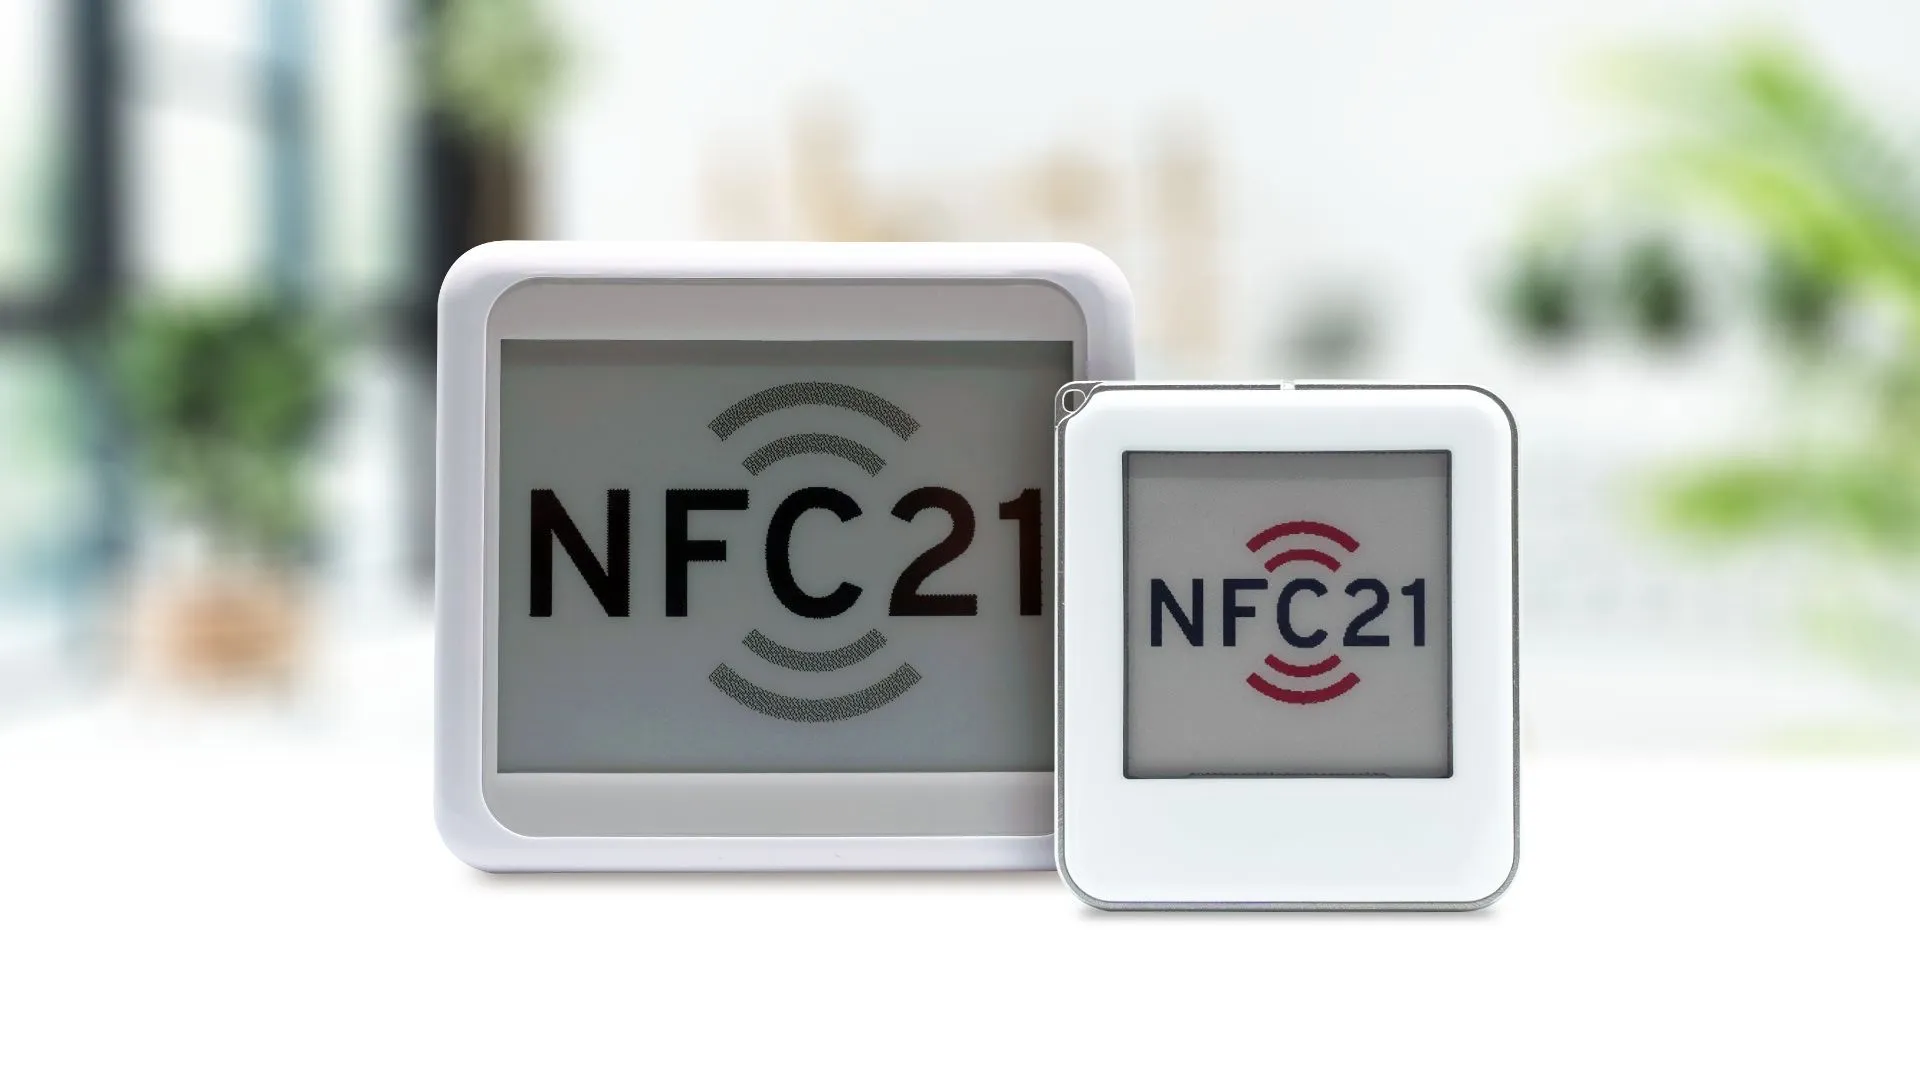 iOS: Write and edit an NFC Display